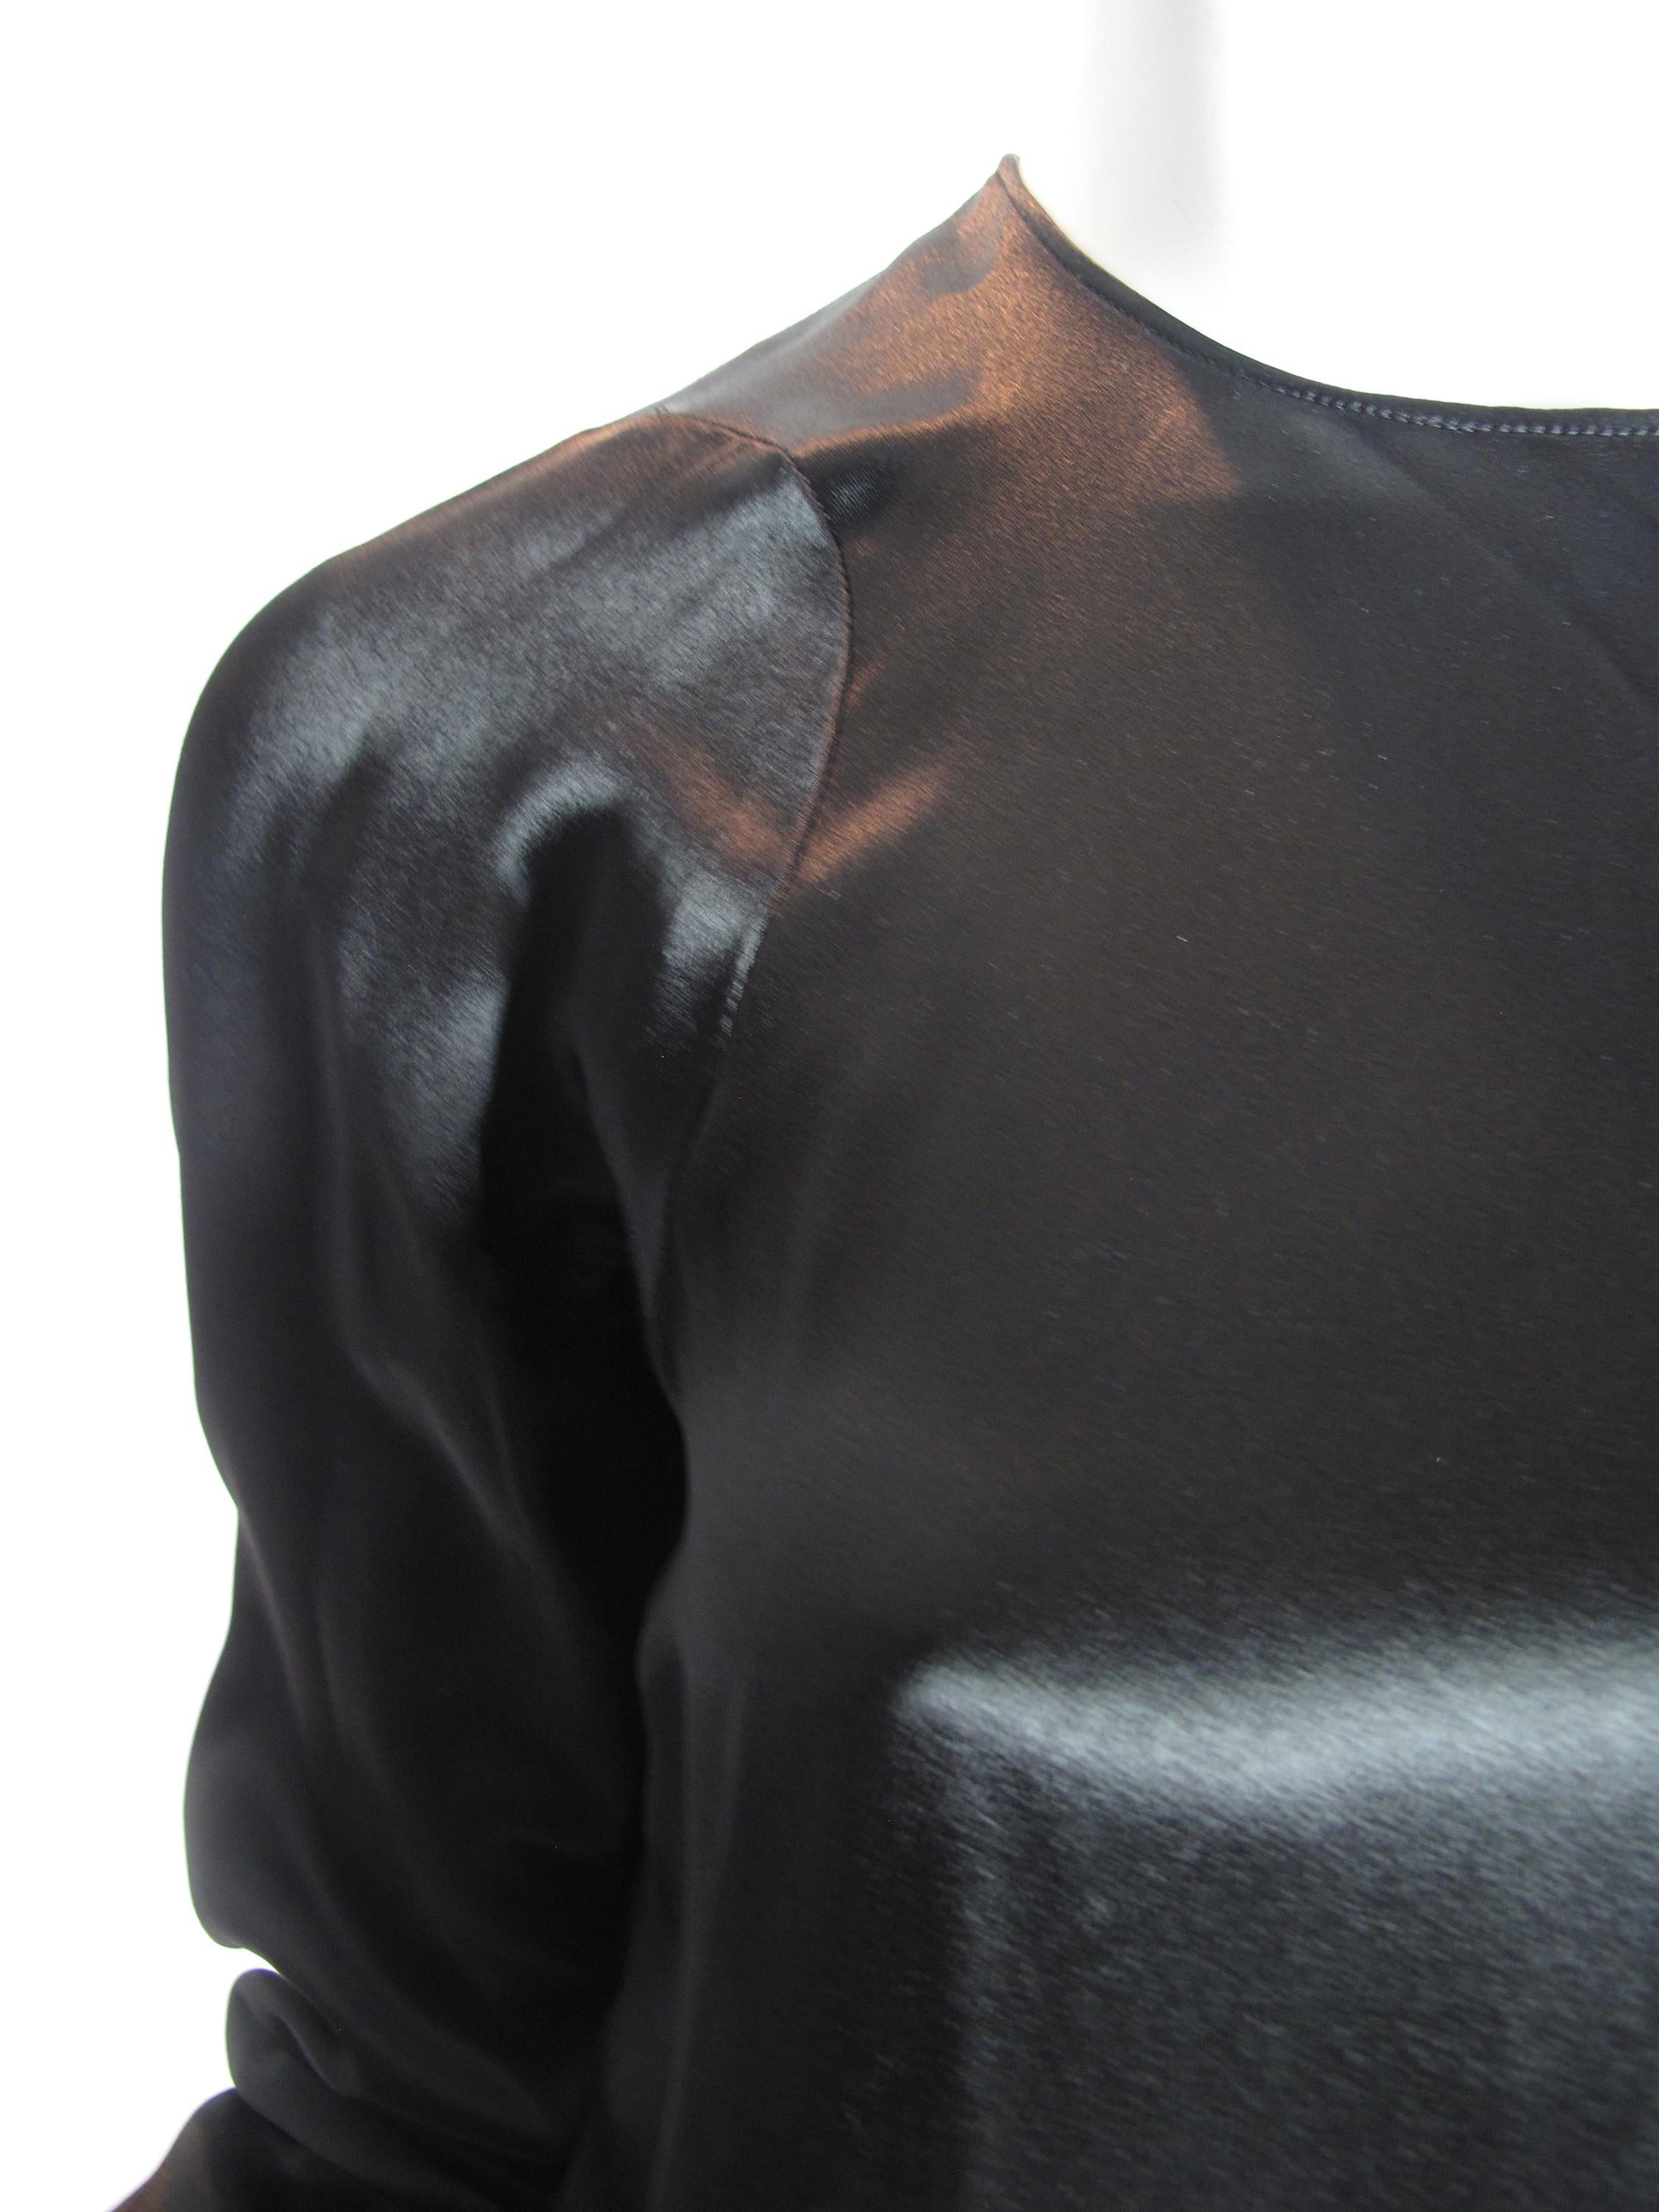 Martin Margiela 1990s black silk long gown. Condition: Excellent. Size M